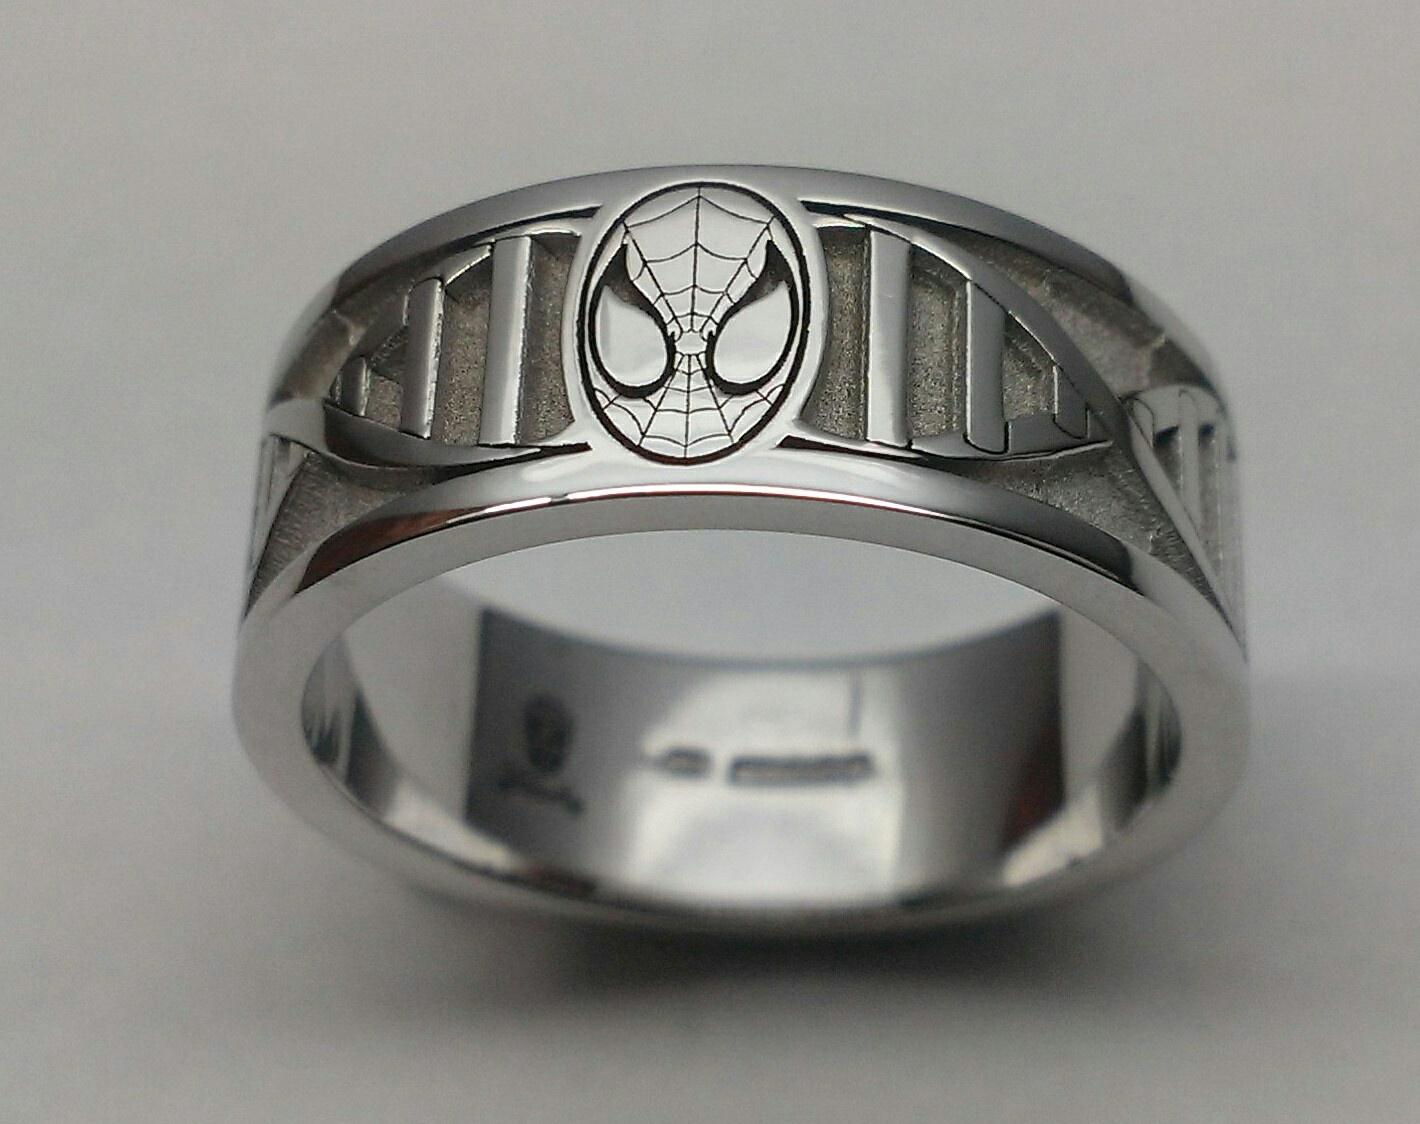 Buy DNA Wedding Ring, Geek Wedding Ring, Braided Wedding Ring, Geek Engagement  Ring, Science Ring, Biology Ring, Nerd Ring, WAVY RING, Helix Online in  India - Etsy